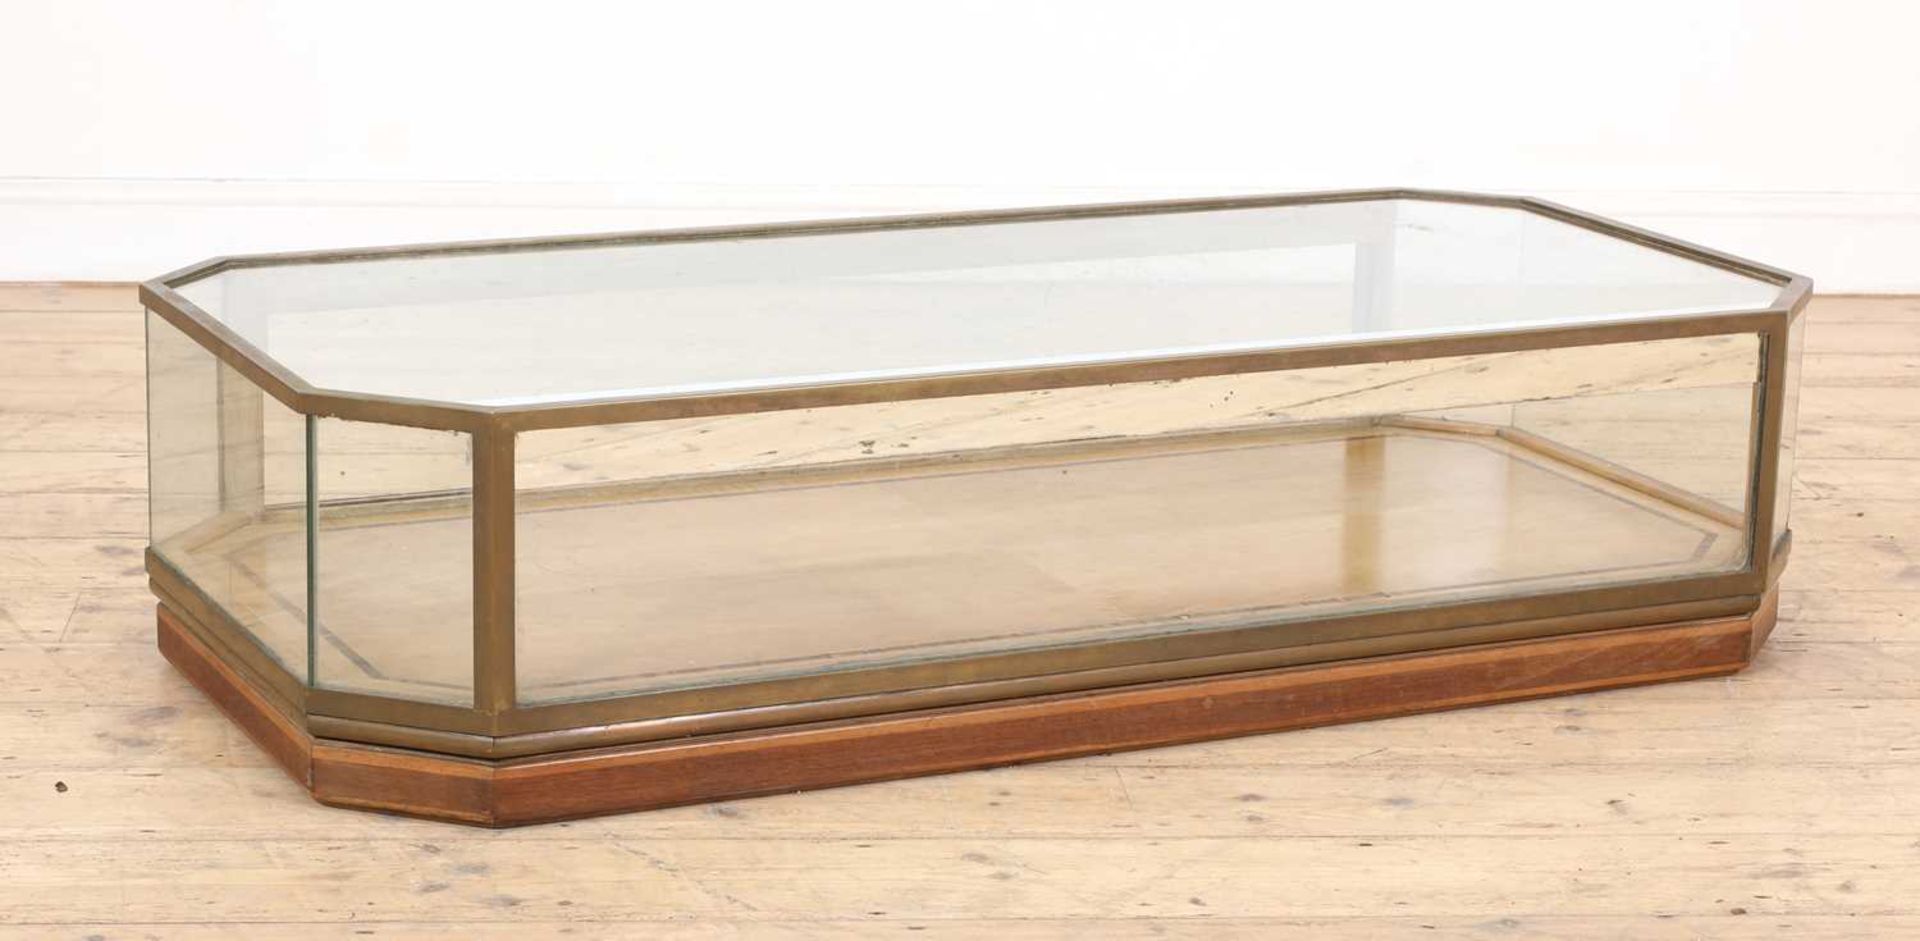 An Art Deco tabletop counter,